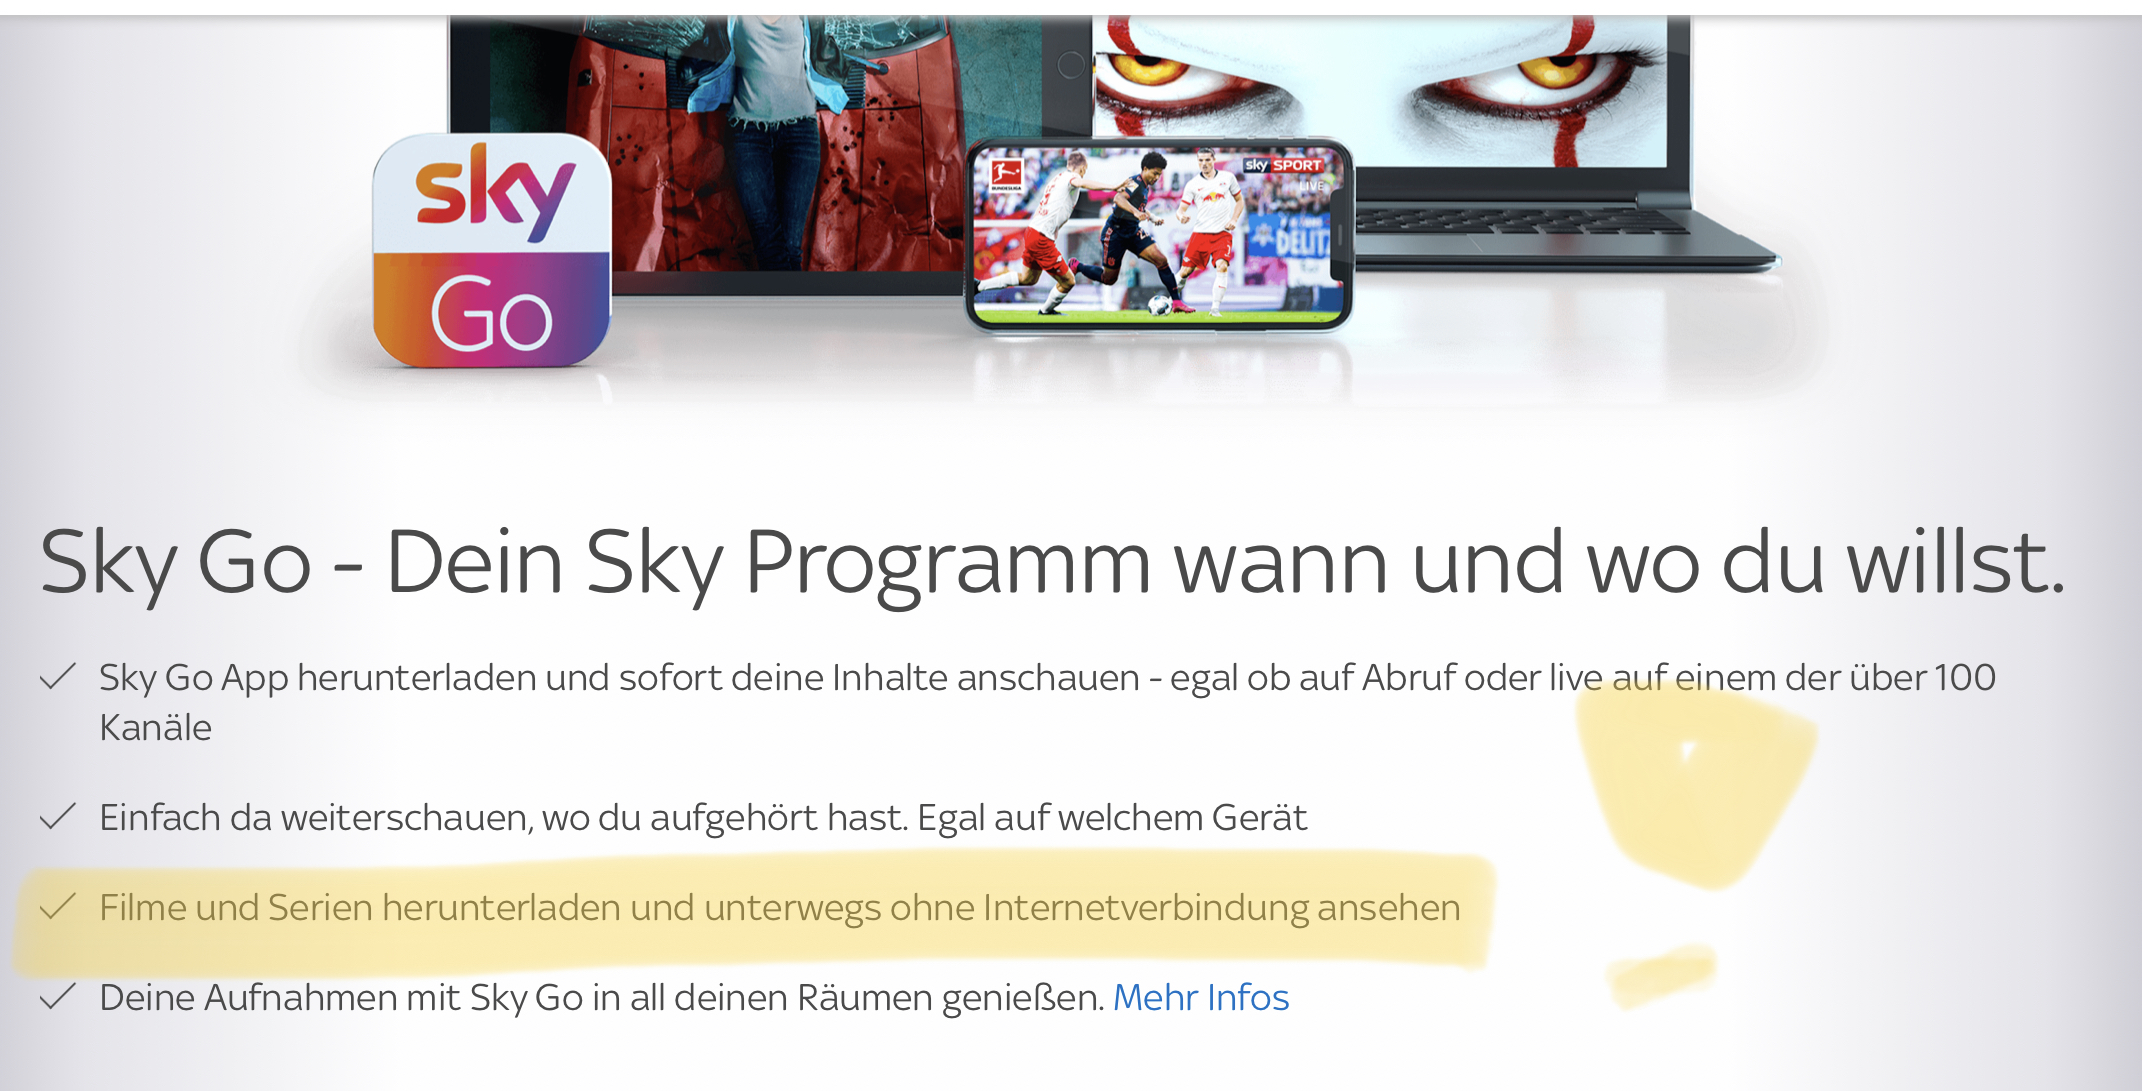 Sky Q Aufnahmen über Sky Go gucken - Sky Community